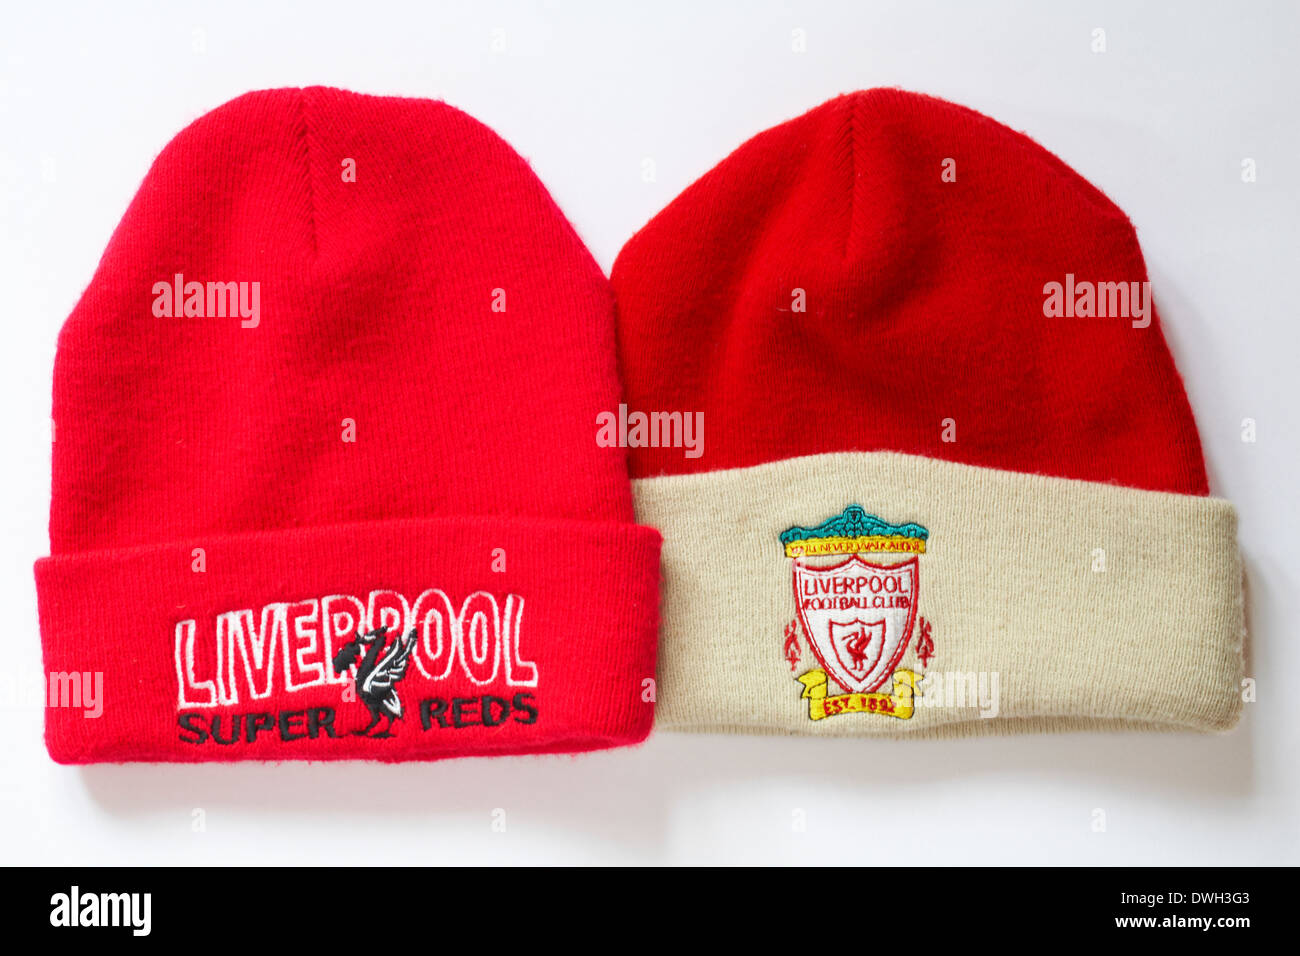 Liverpool Football Club Crest Stock Photos Liverpool 